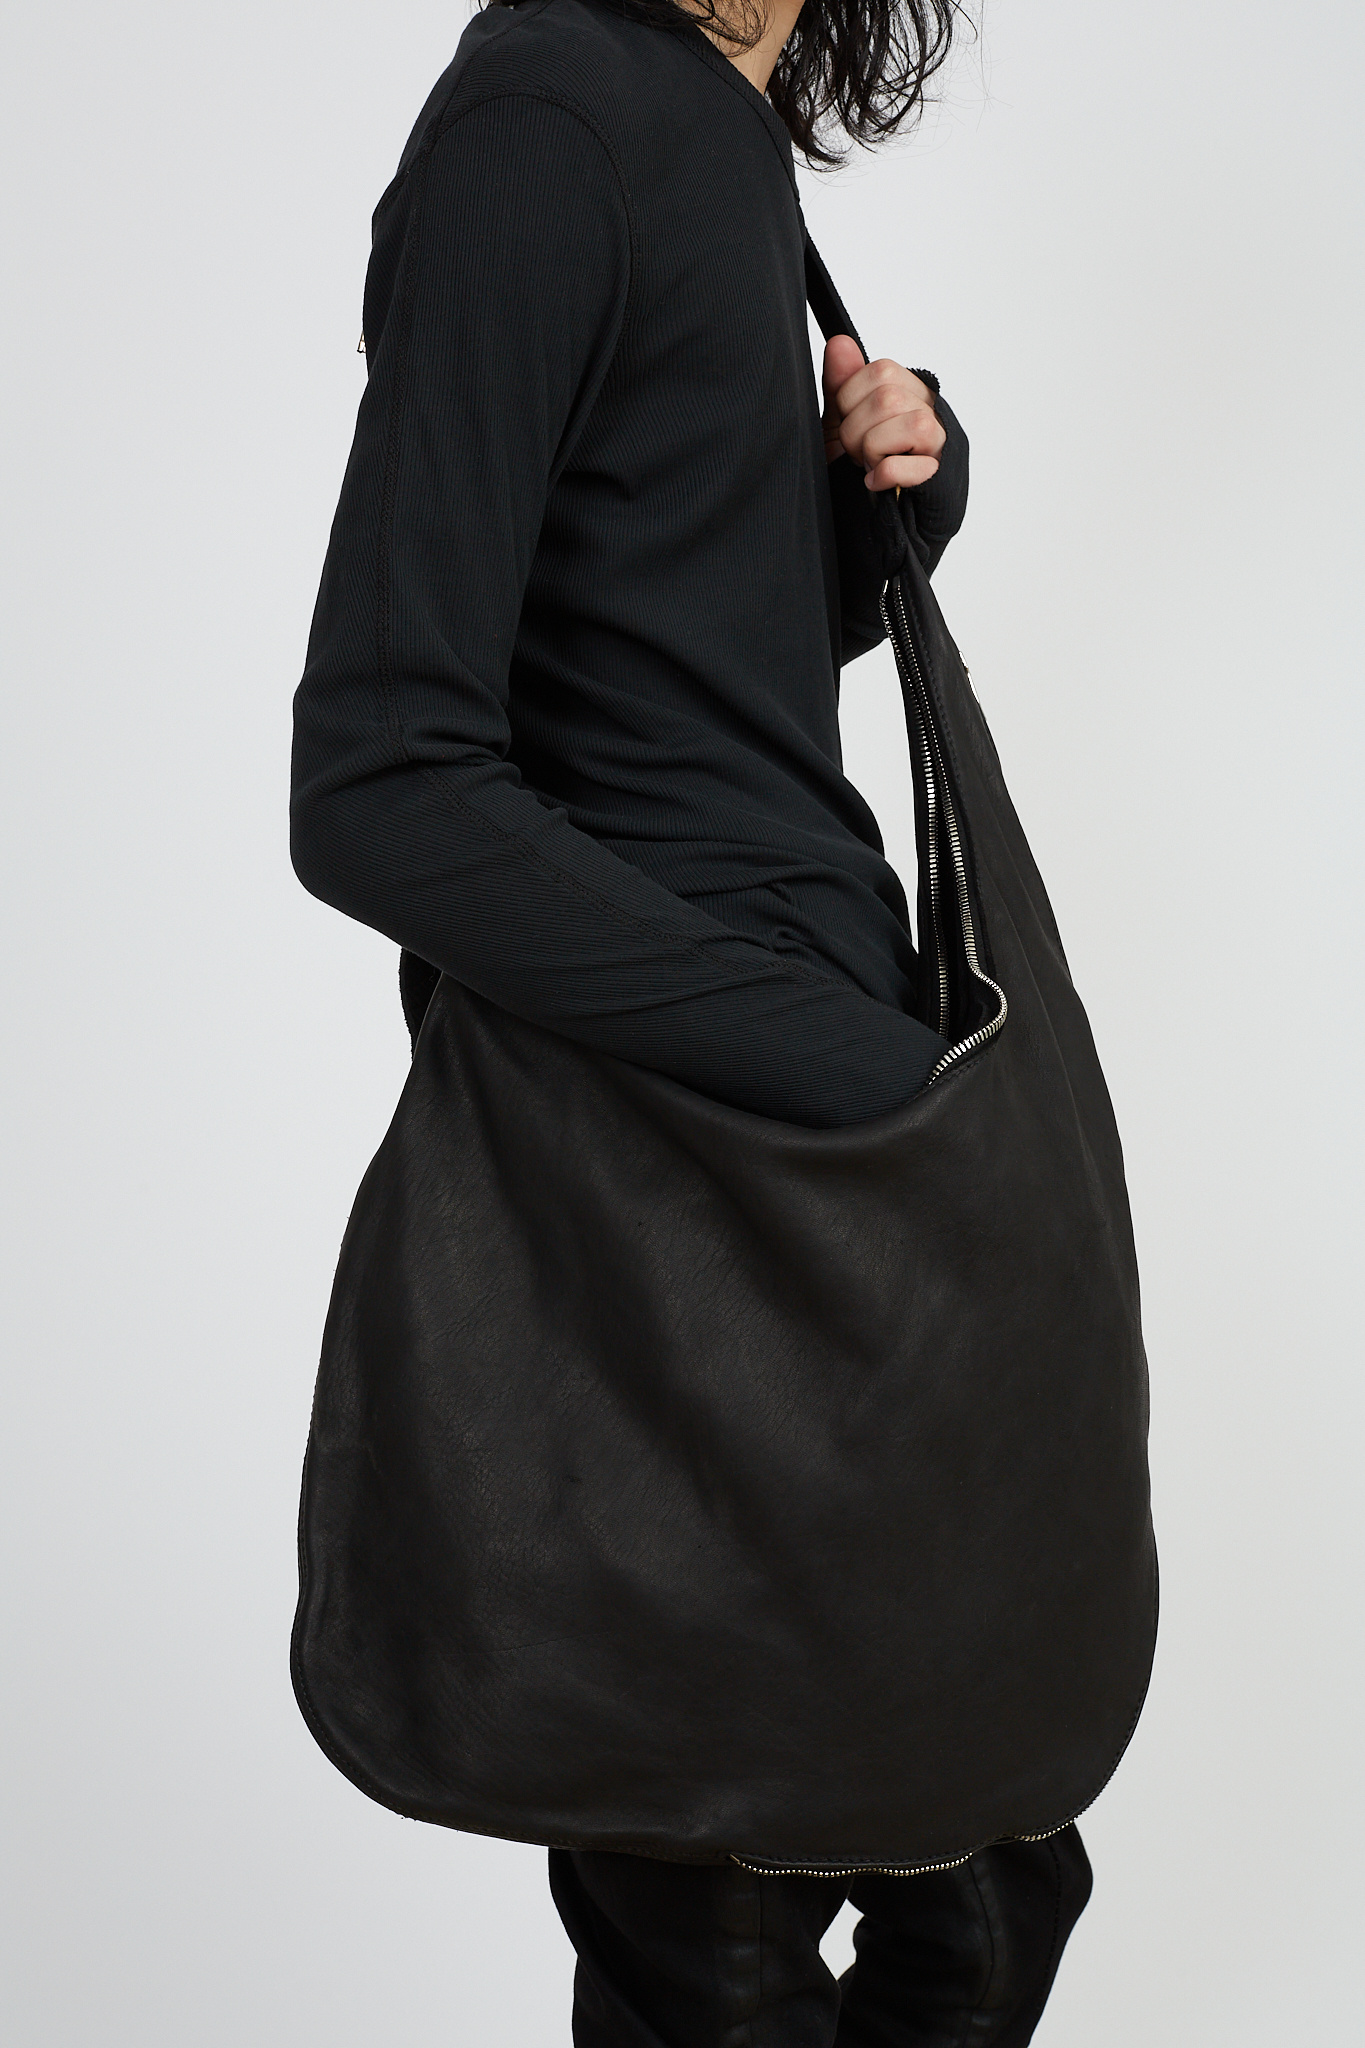 Esquire Purse Toscana High Stock Market mit Geheimfach Black, Buy bags,  purses & accessories online